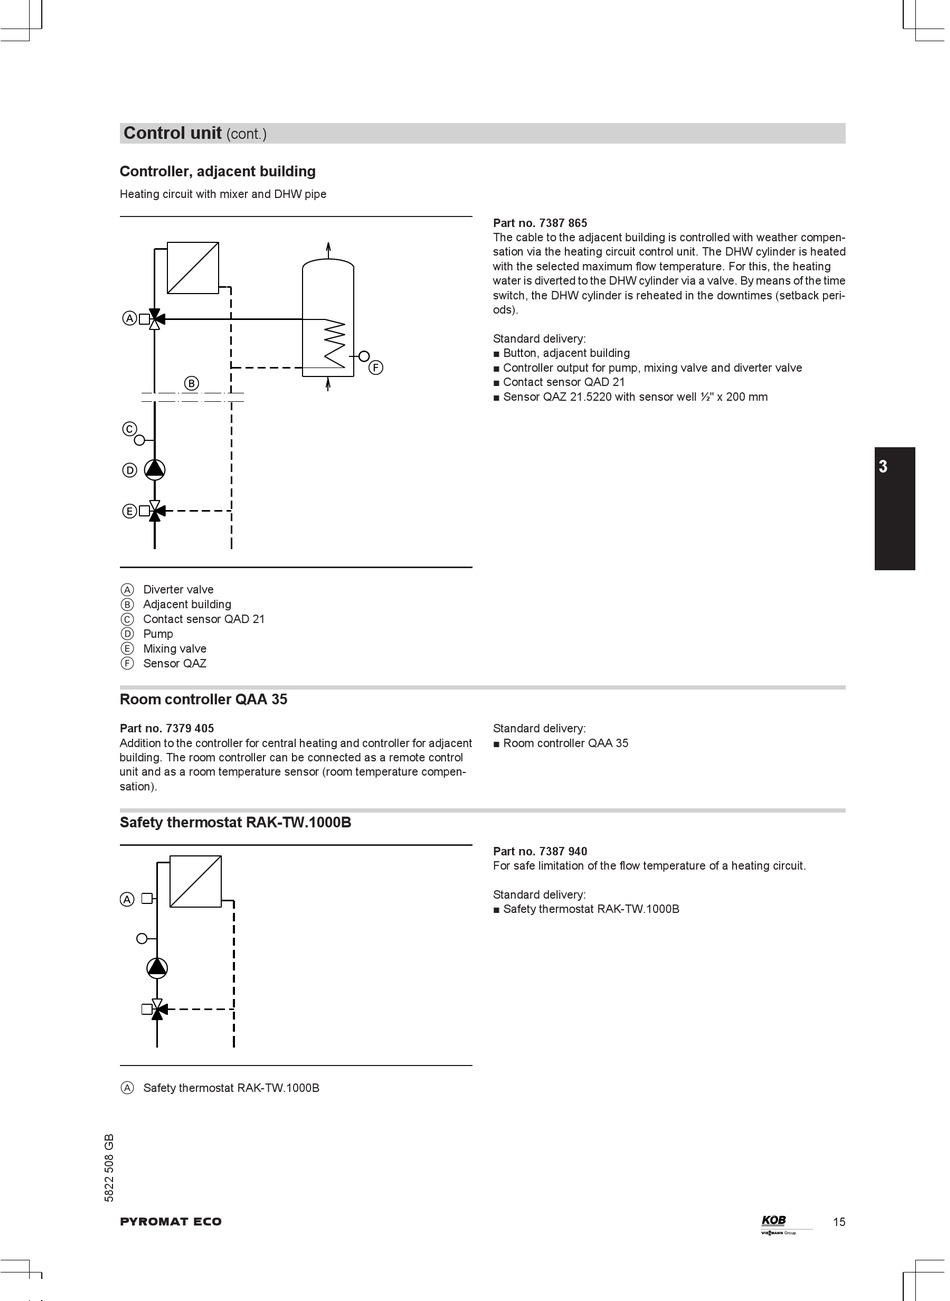 Controller, Adjacent Building; Room Controller Qaa 35; Safety Thermostat Rak -Tw.1000B - KOB PYROMAT ECO 35 Technical Manual [Page 15]